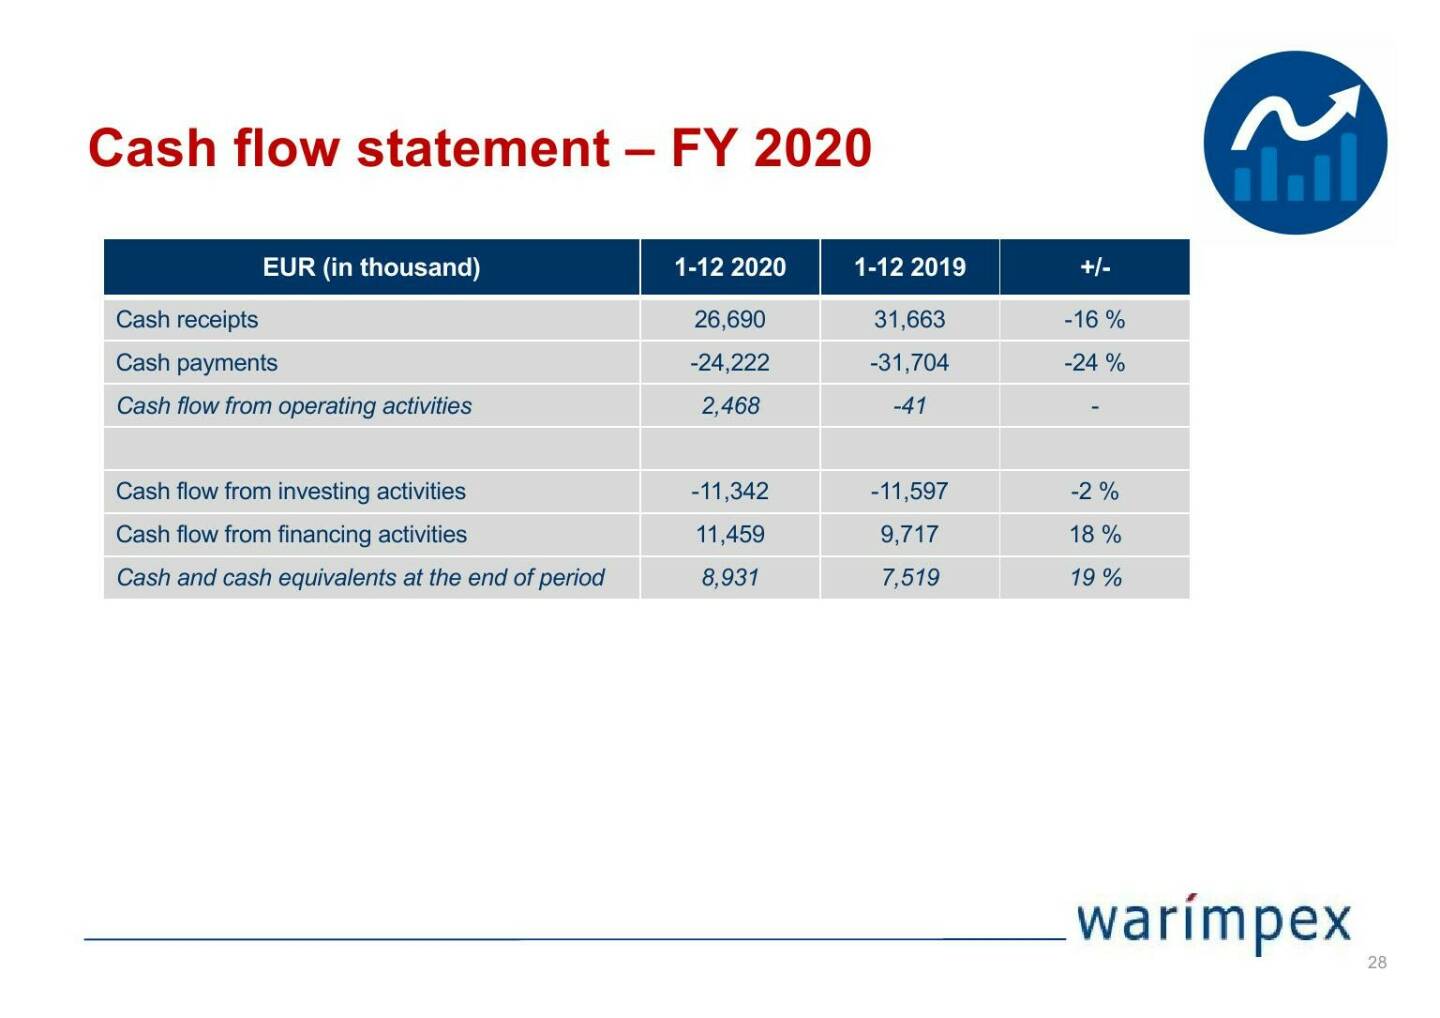 Warimpex - Cash flow statement - FY 2020